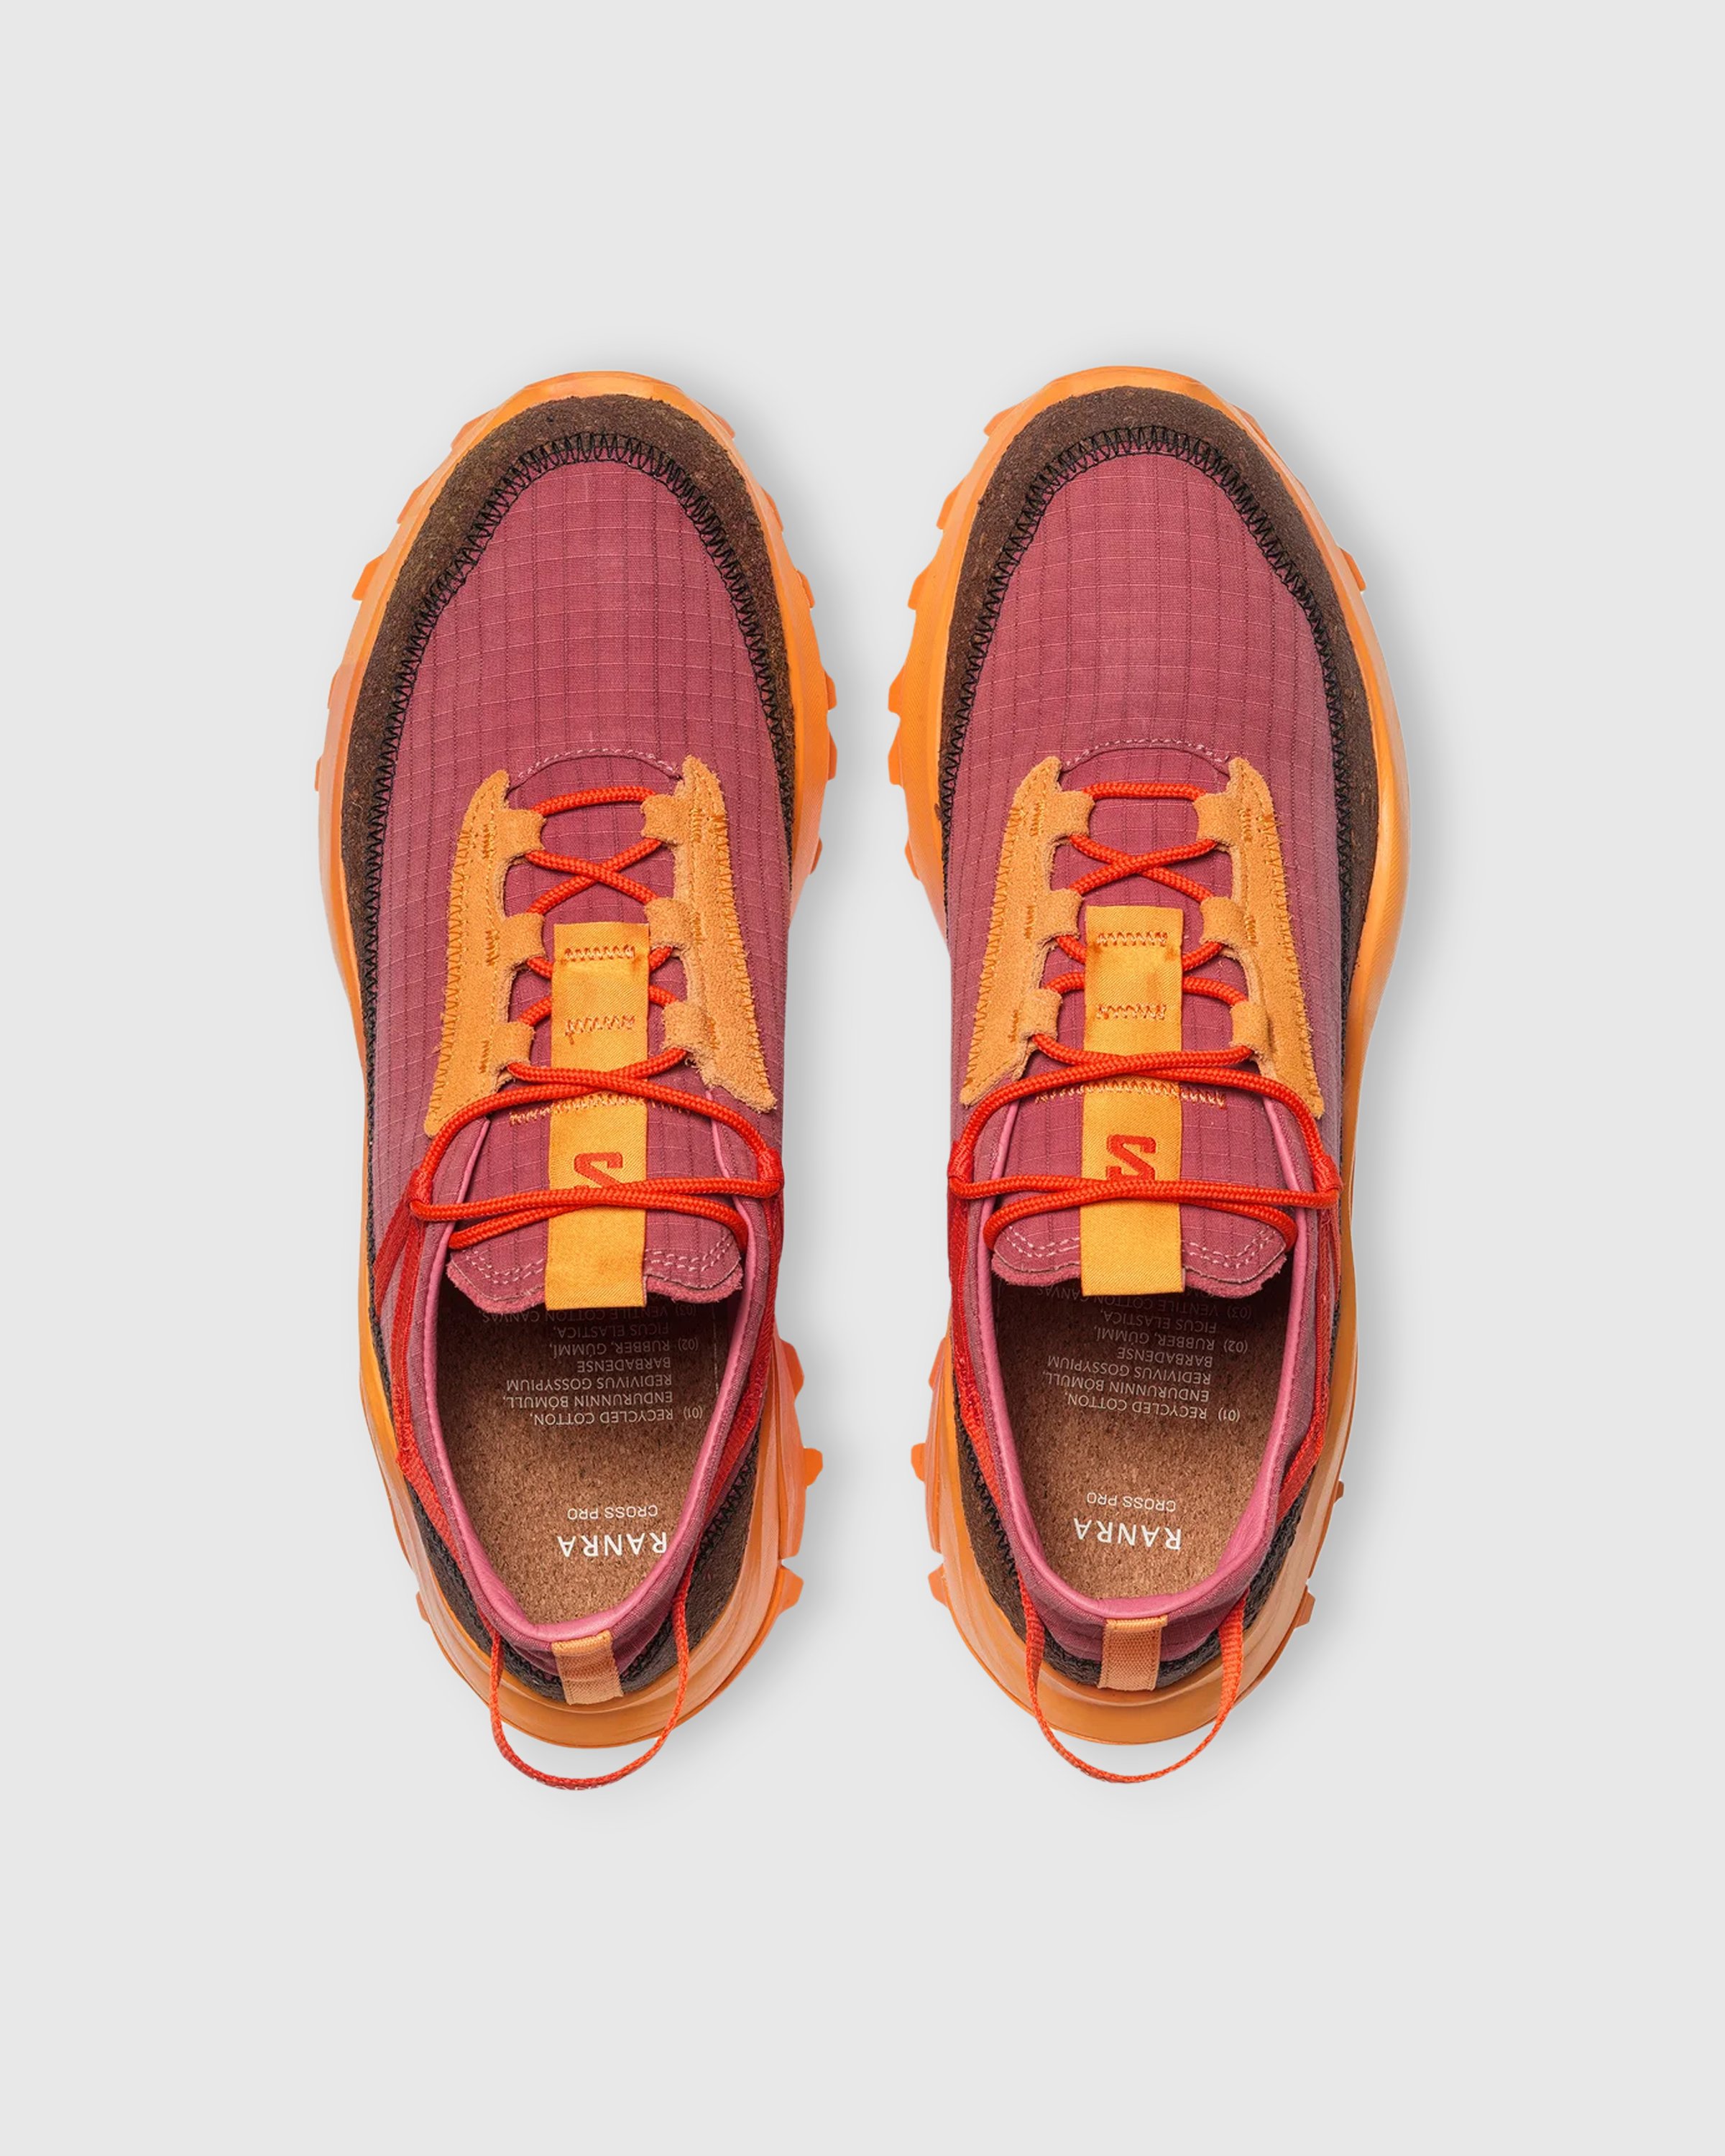 RANRA x Salomon - CROSS PRO BETTER RUBIA - Footwear - Orange - Image 3